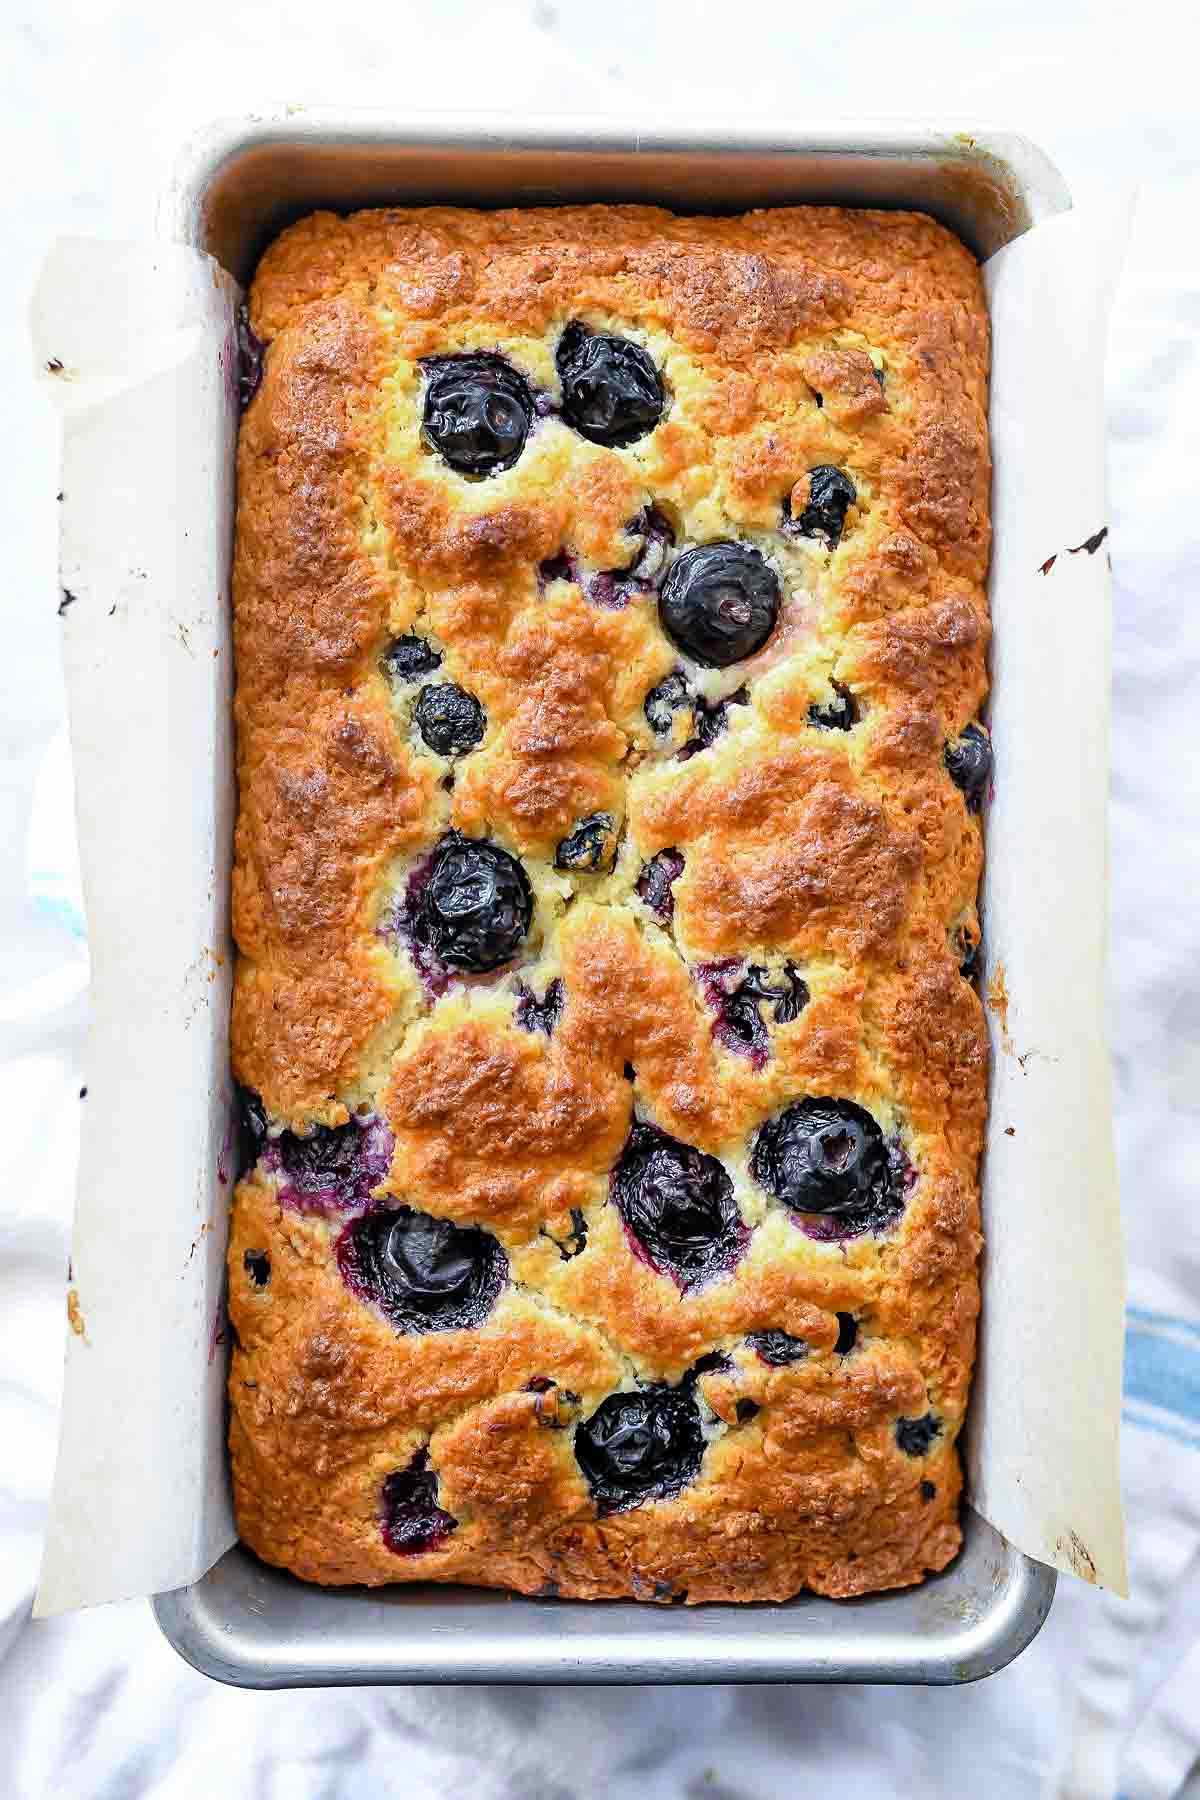 https://www.foodiecrush.com/wp-content/uploads/2018/06/Blueberry-Oatmeal-Bread-foodiecrush.com-007.jpg